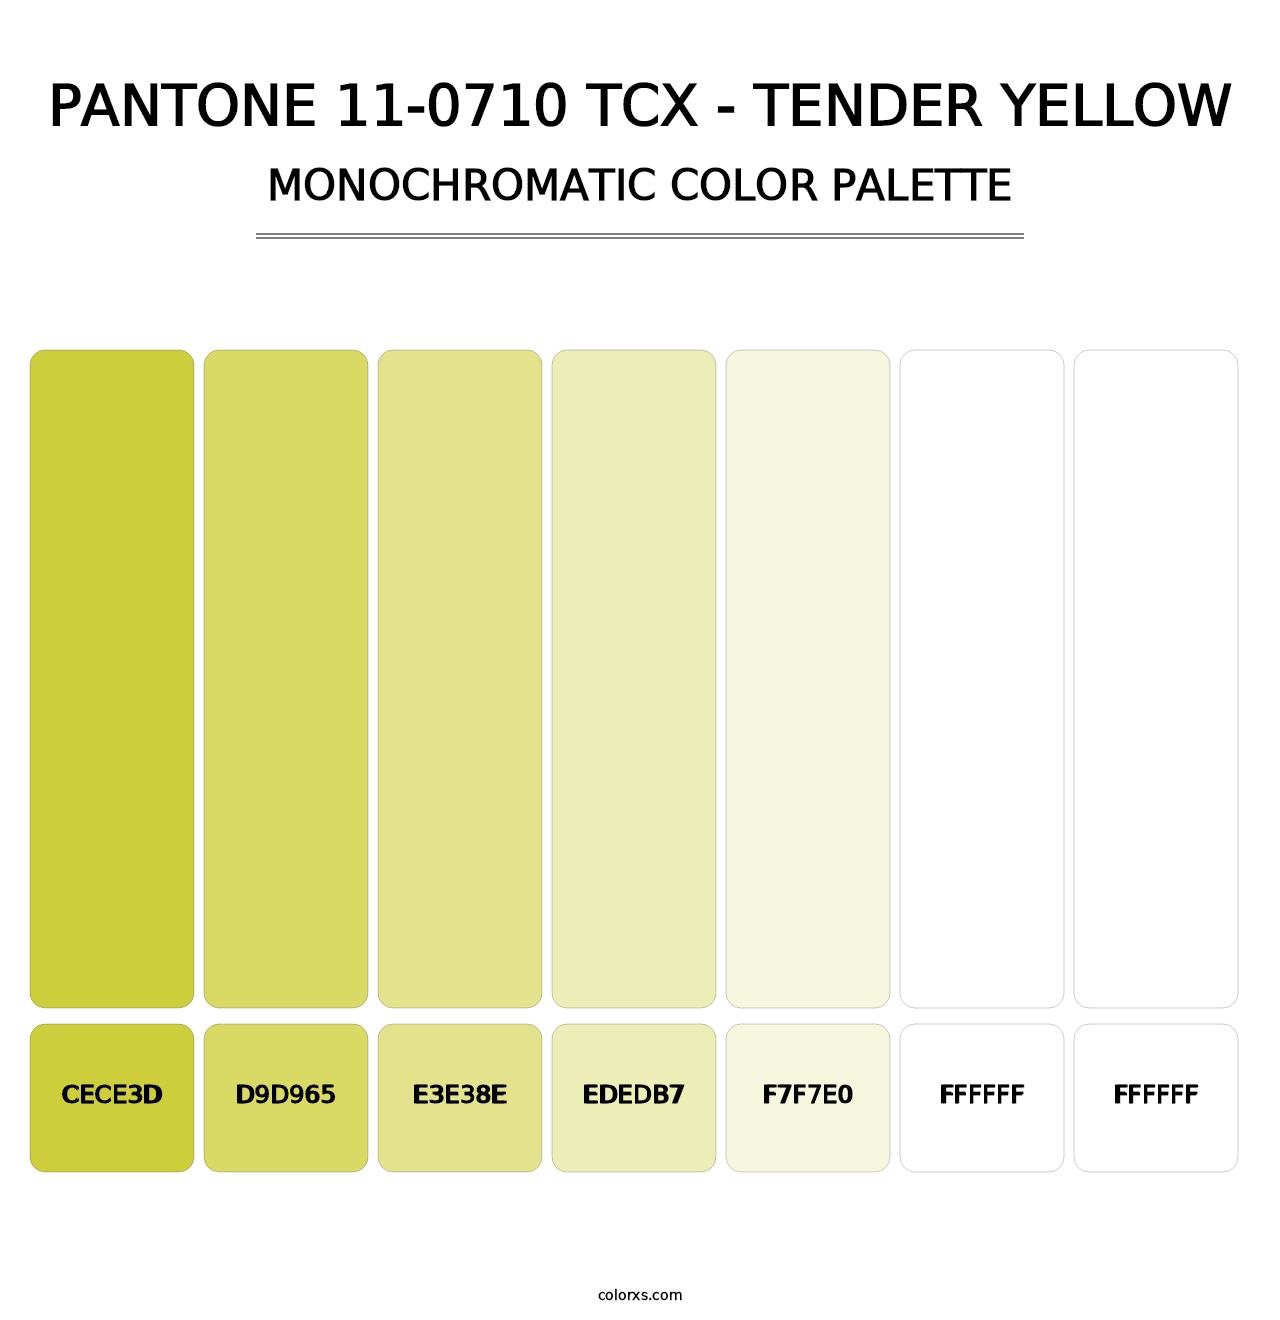 PANTONE 11-0710 TCX - Tender Yellow - Monochromatic Color Palette